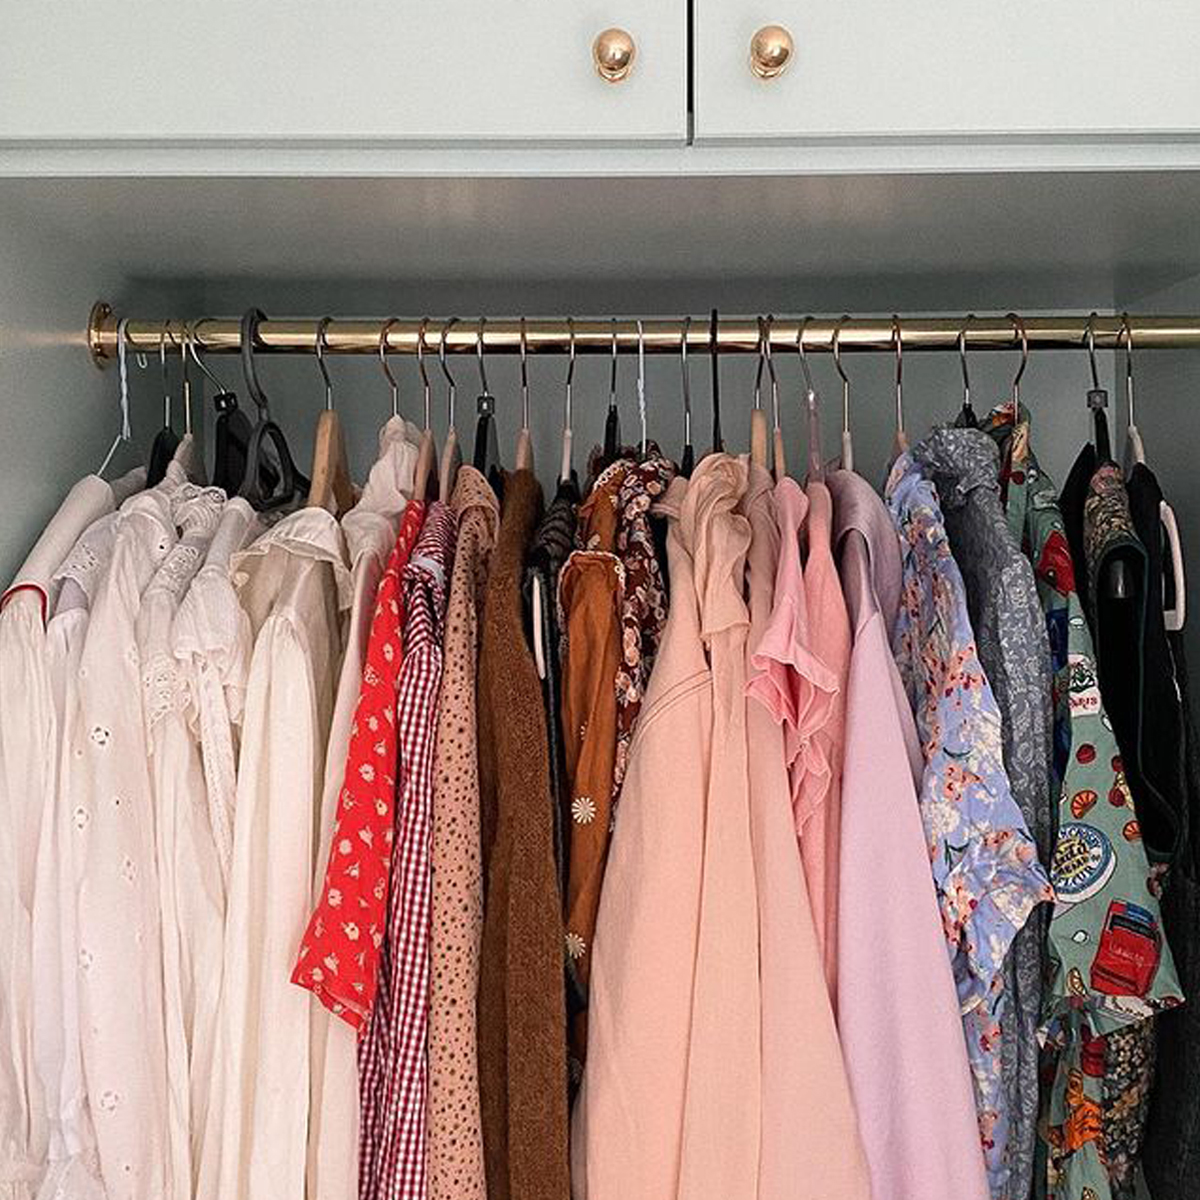 The Best Wardrobe Storage Ideas, According to Experts